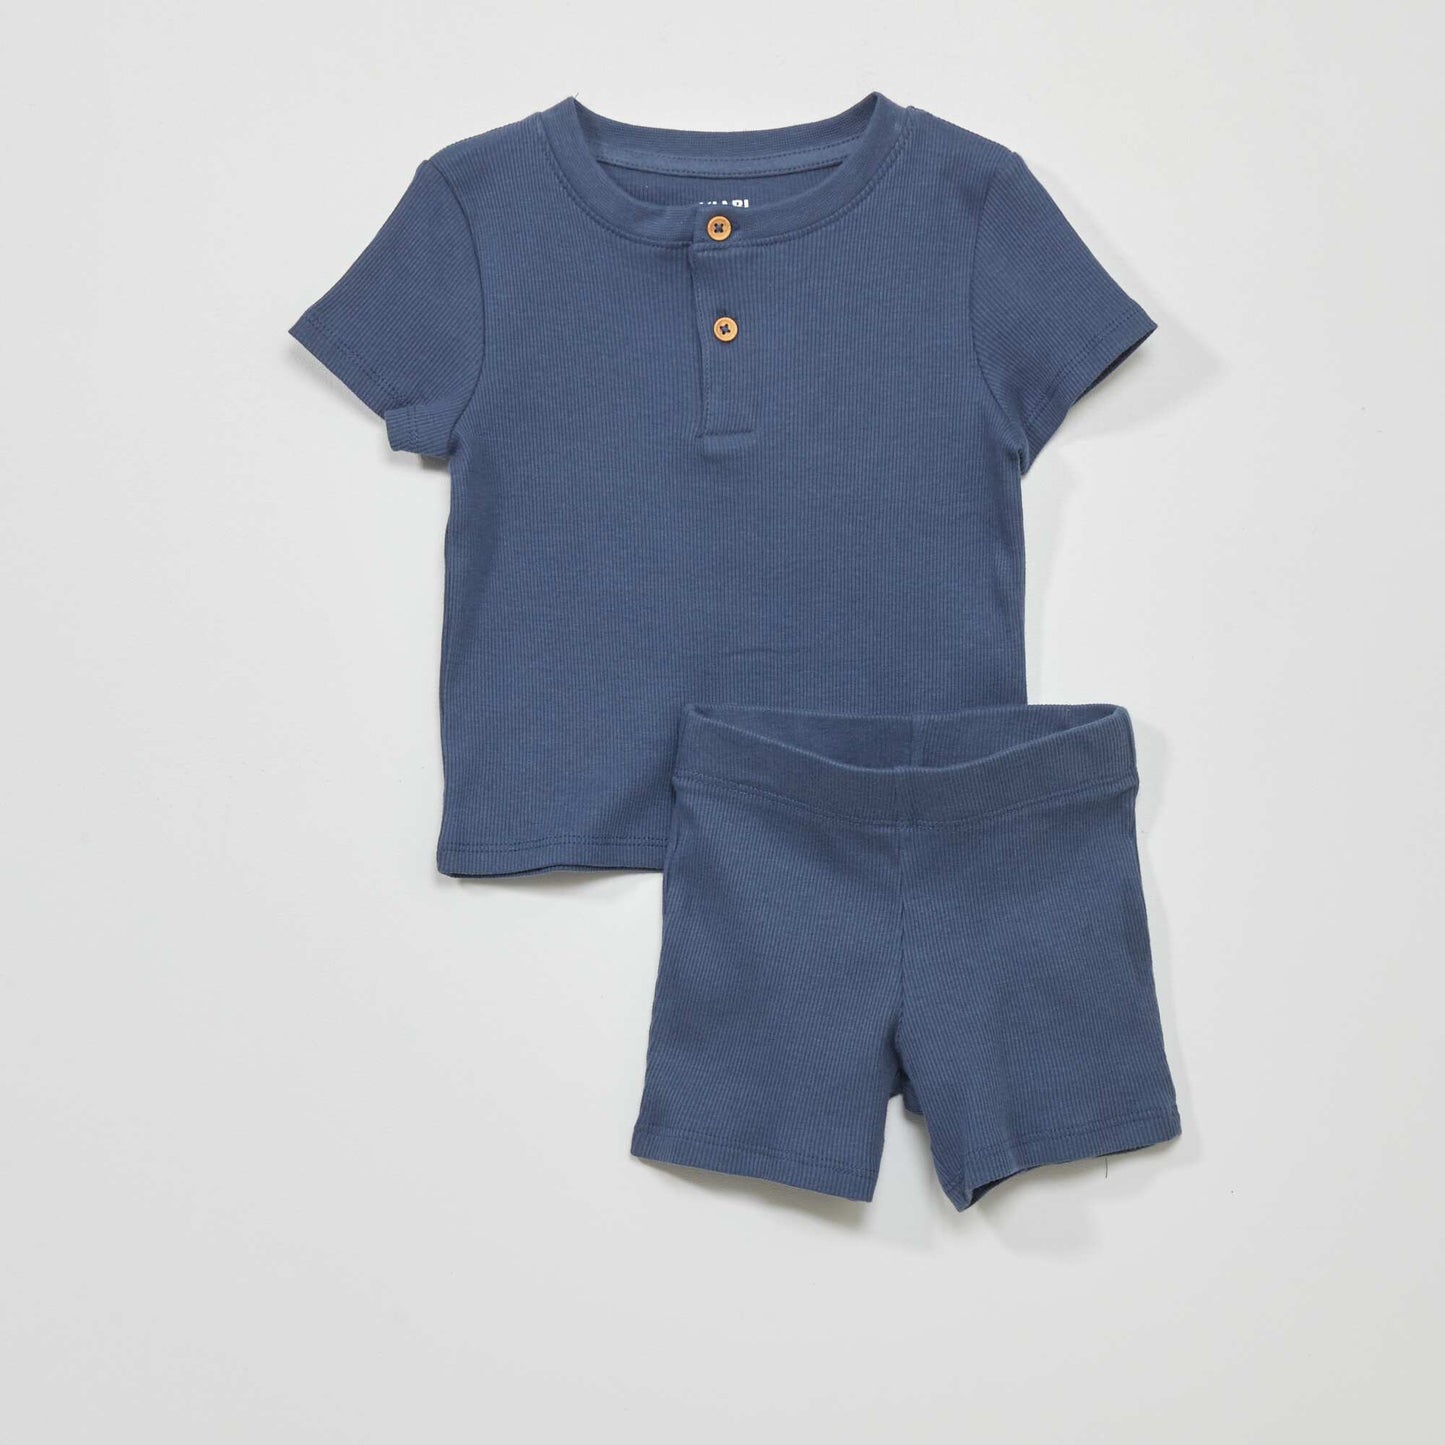 Short pyjama set - Two-piece set BLUE